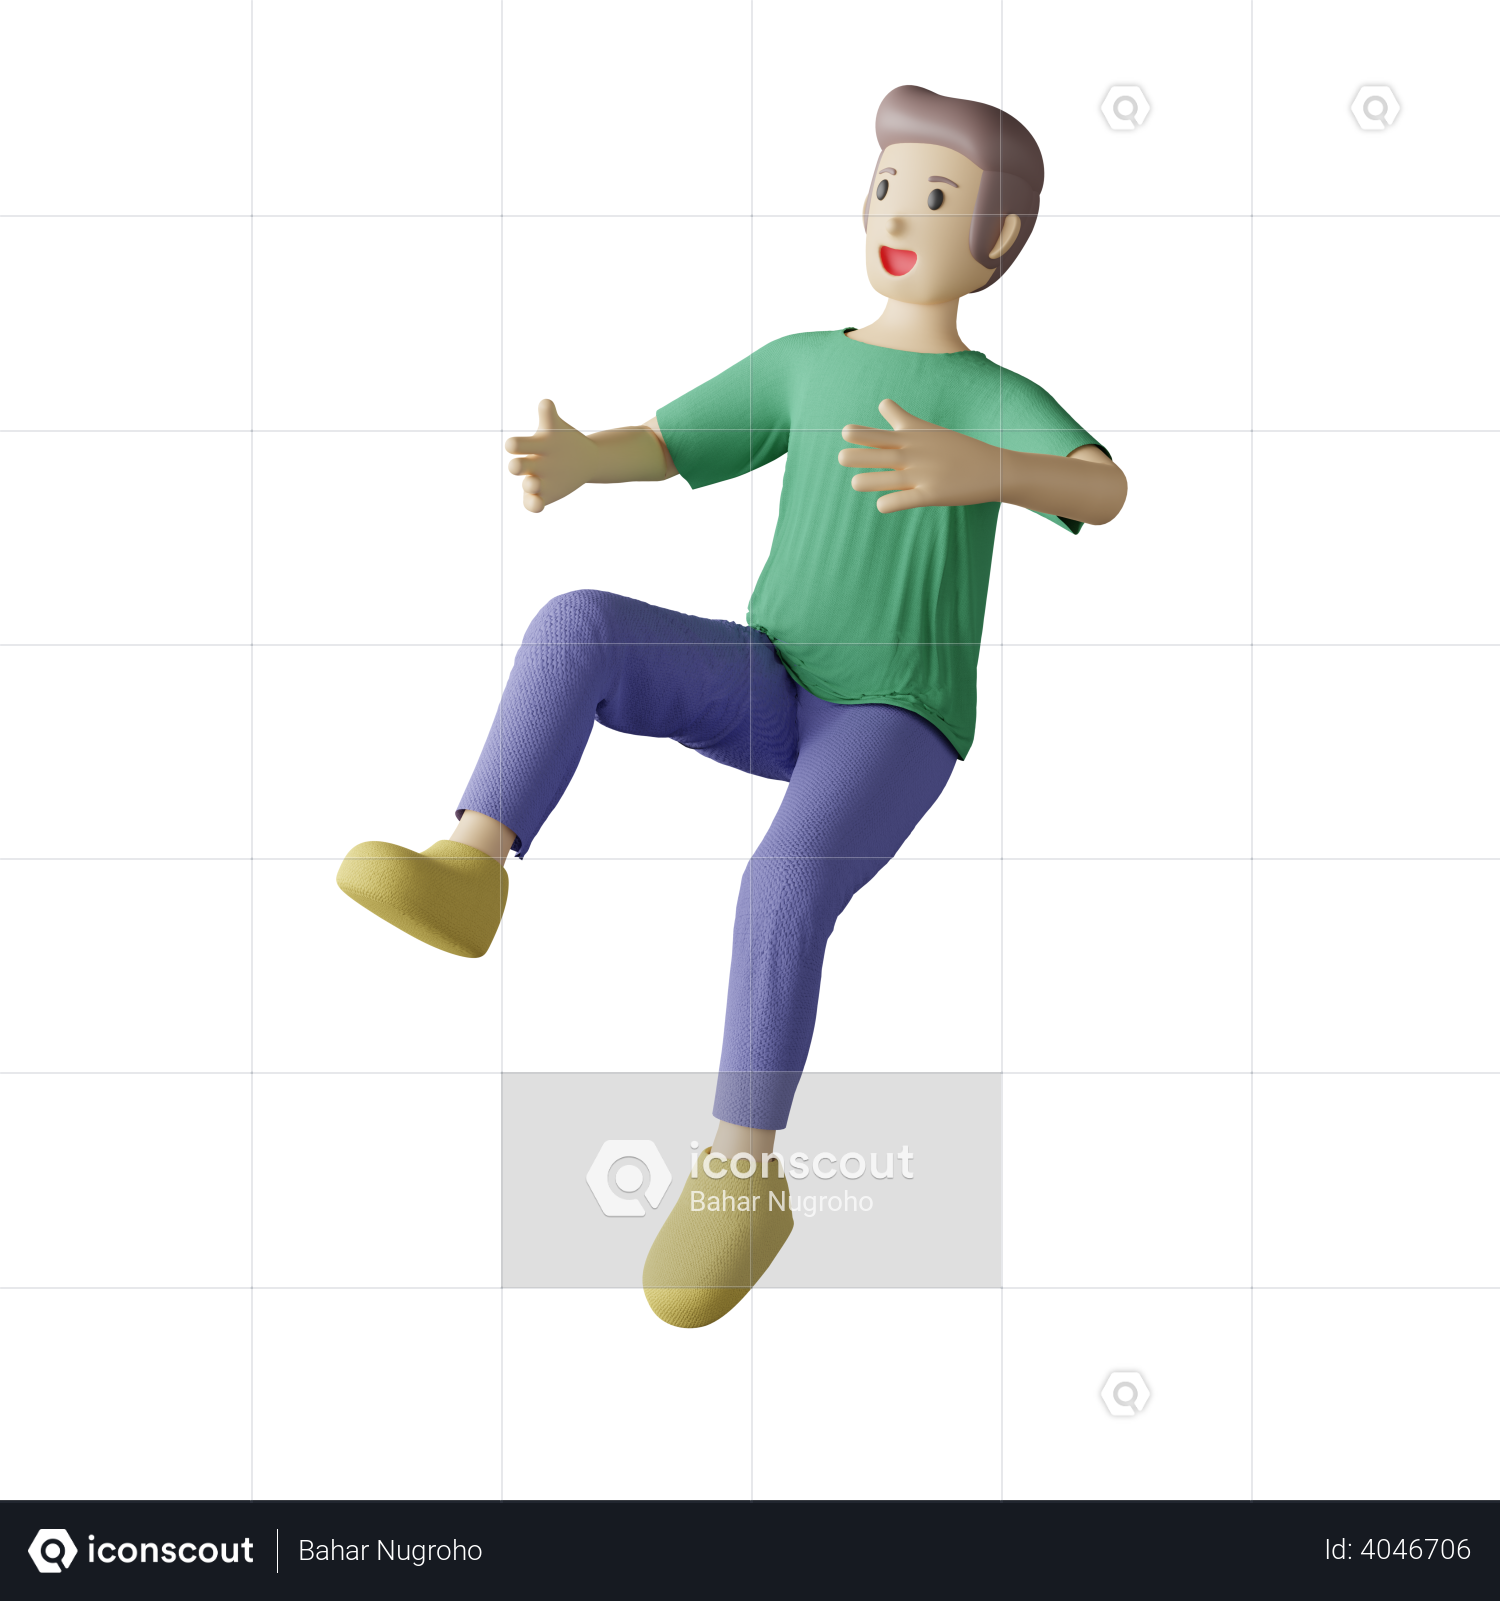 ArtStation - 2 Male hand poses free 3D model OBJ | Resources